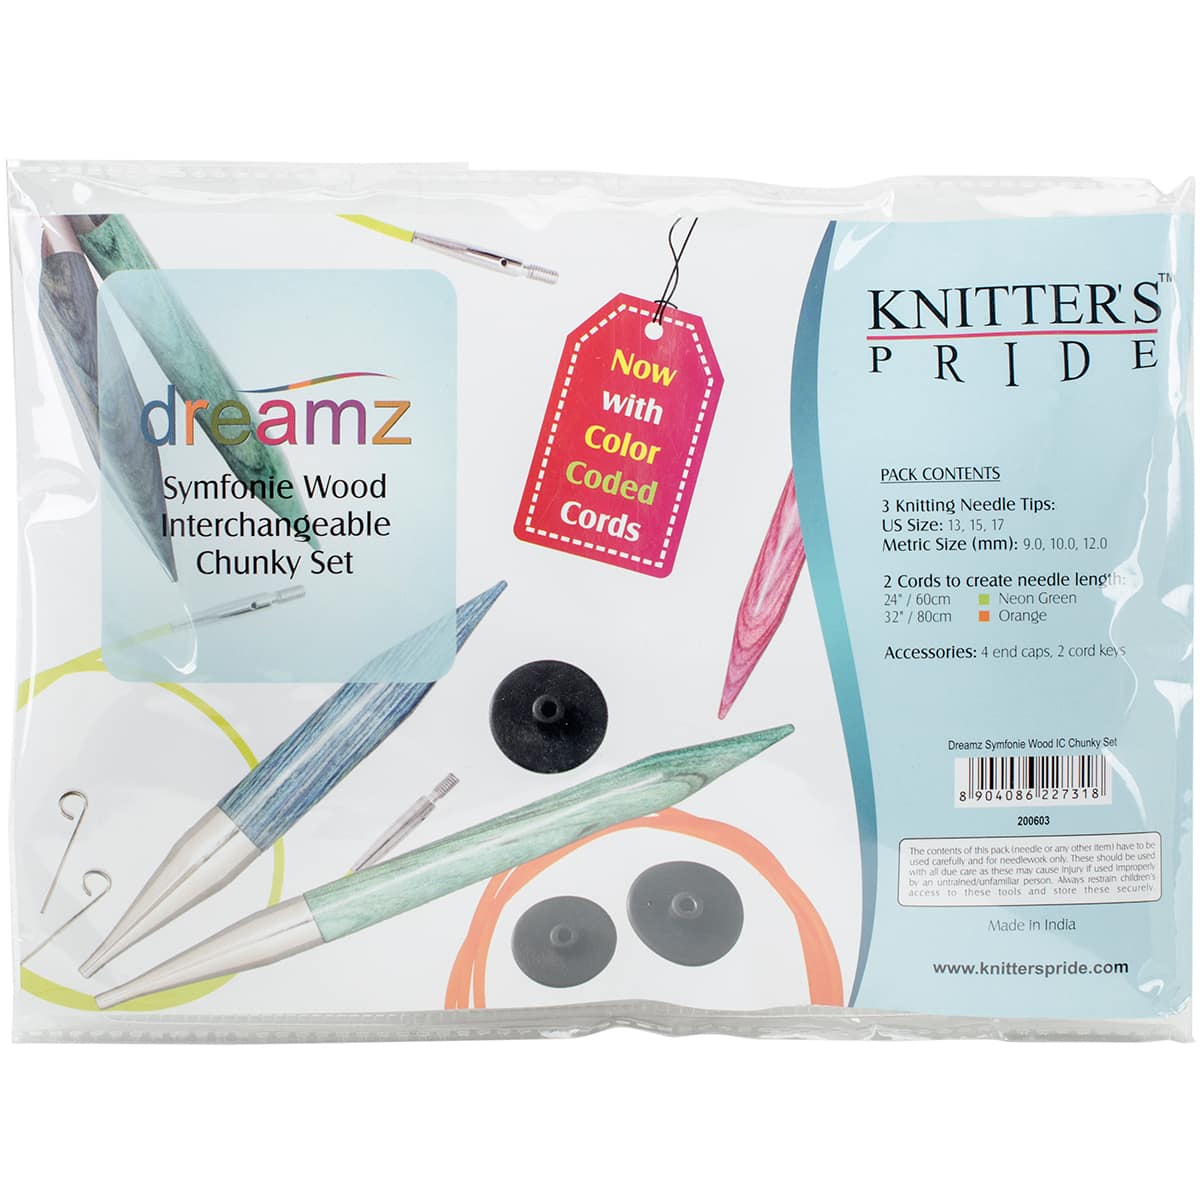 Knitter's Pride Dreamz Interchangeable Sets